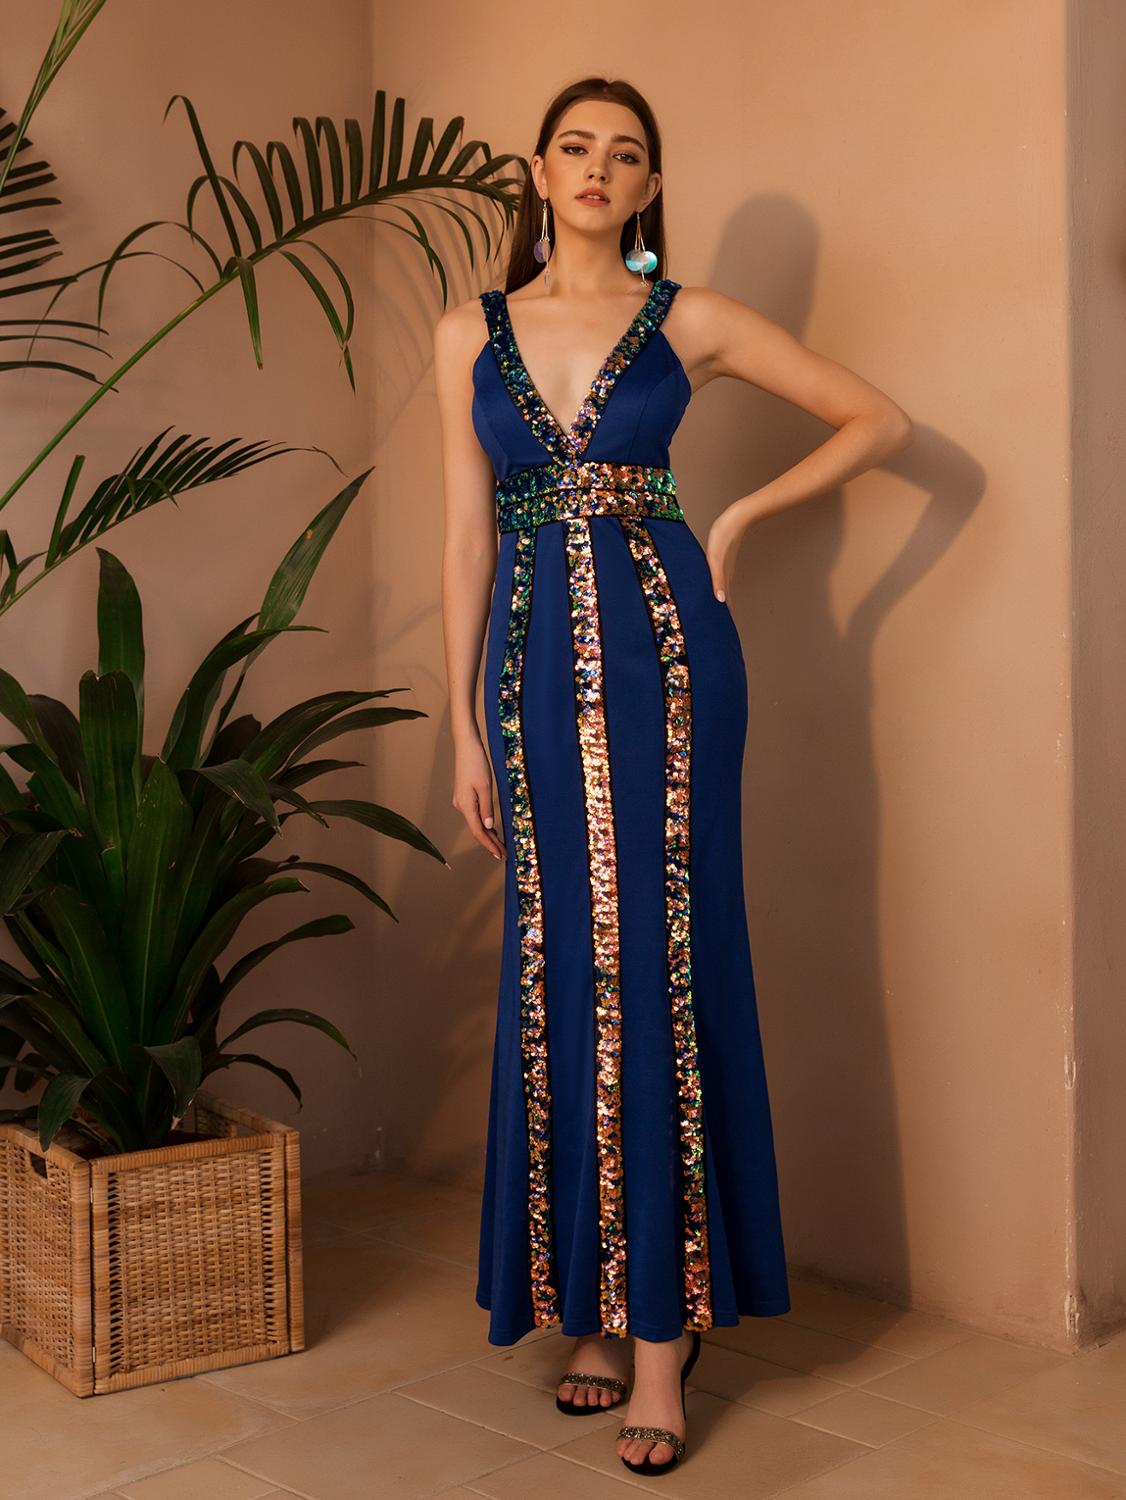 Angel-fashions V Neck Sequined V Back Mermaid Long Prom Dress Blue 553